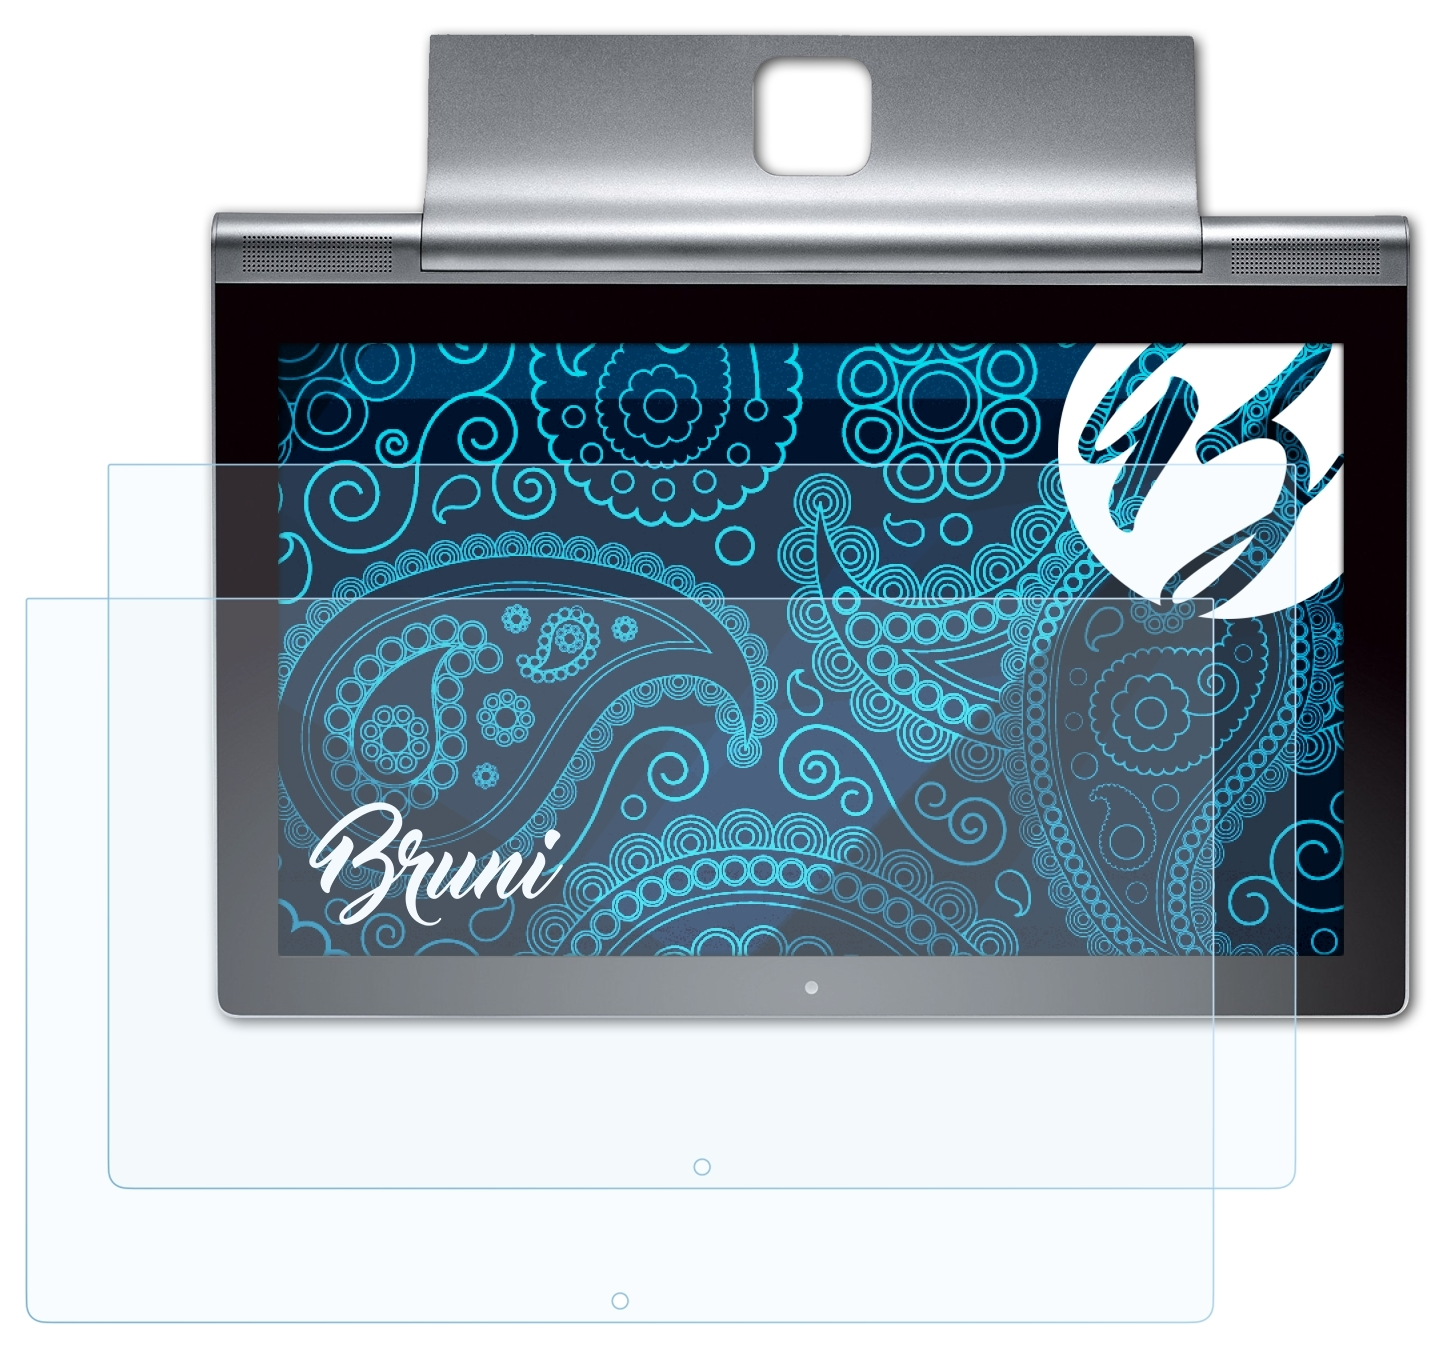 BRUNI 2x Basics-Clear Schutzfolie(für Lenovo Tablet Pro 2 inch)) Yoga (13.3